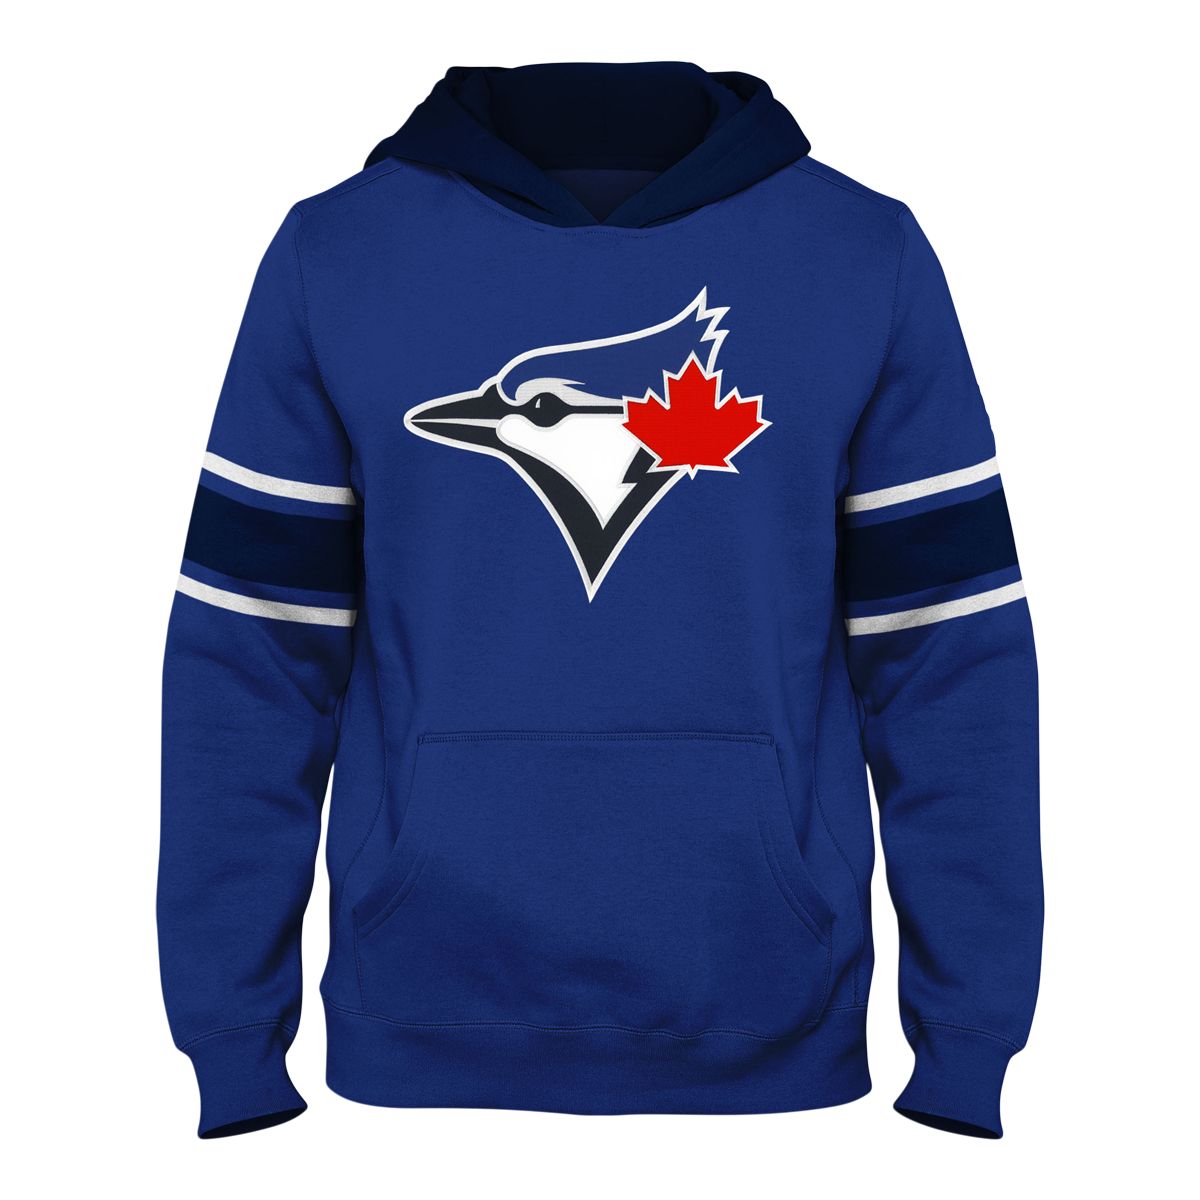 Kids Toronto Blue Jays Gear, Youth Blue Jays Apparel, Merchandise